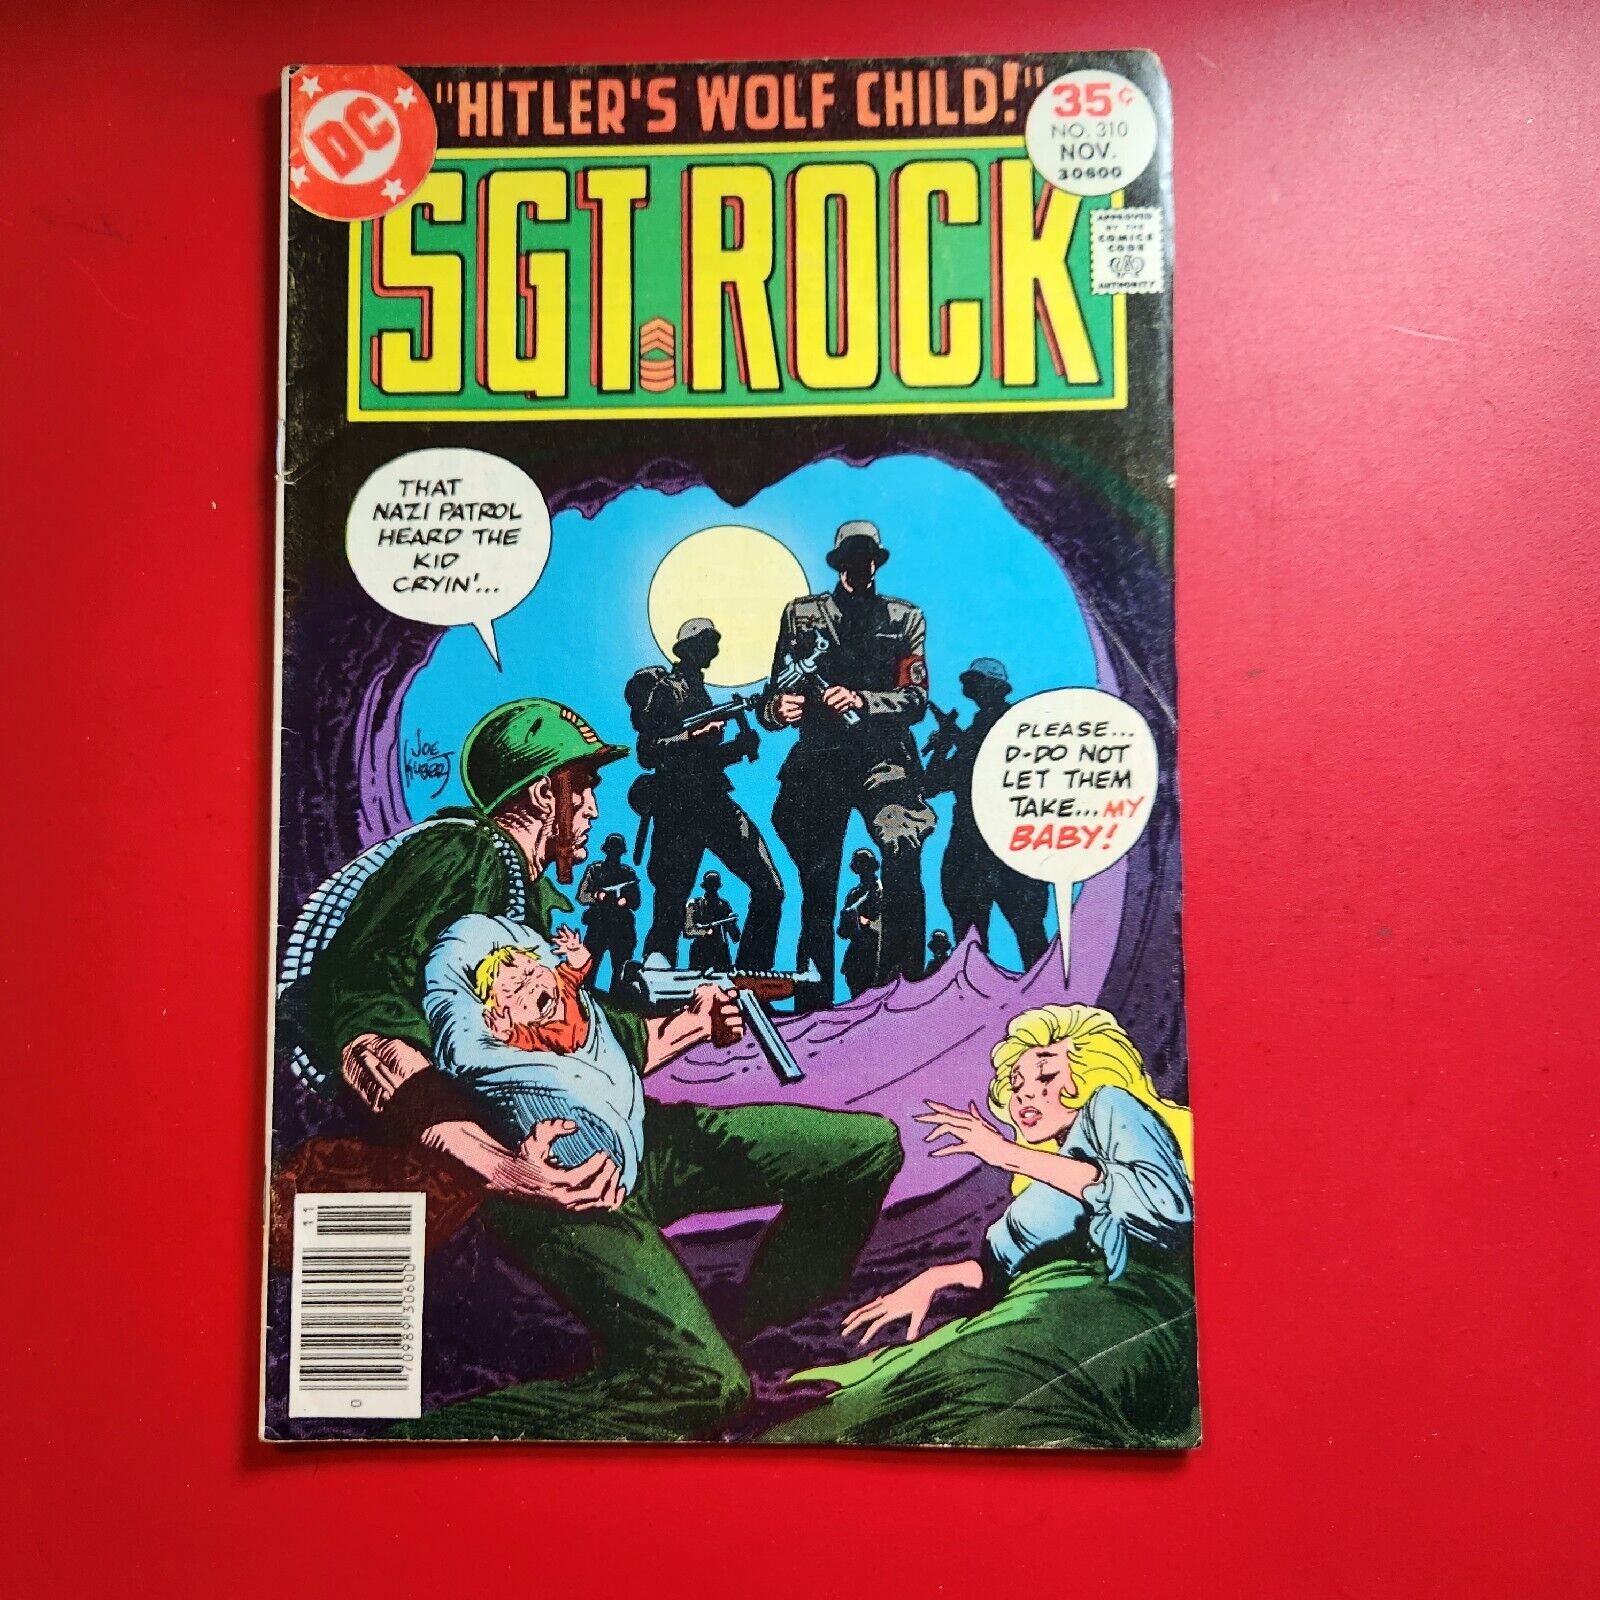 Sgt. Rock #310 1977 DC Comic Book VG+